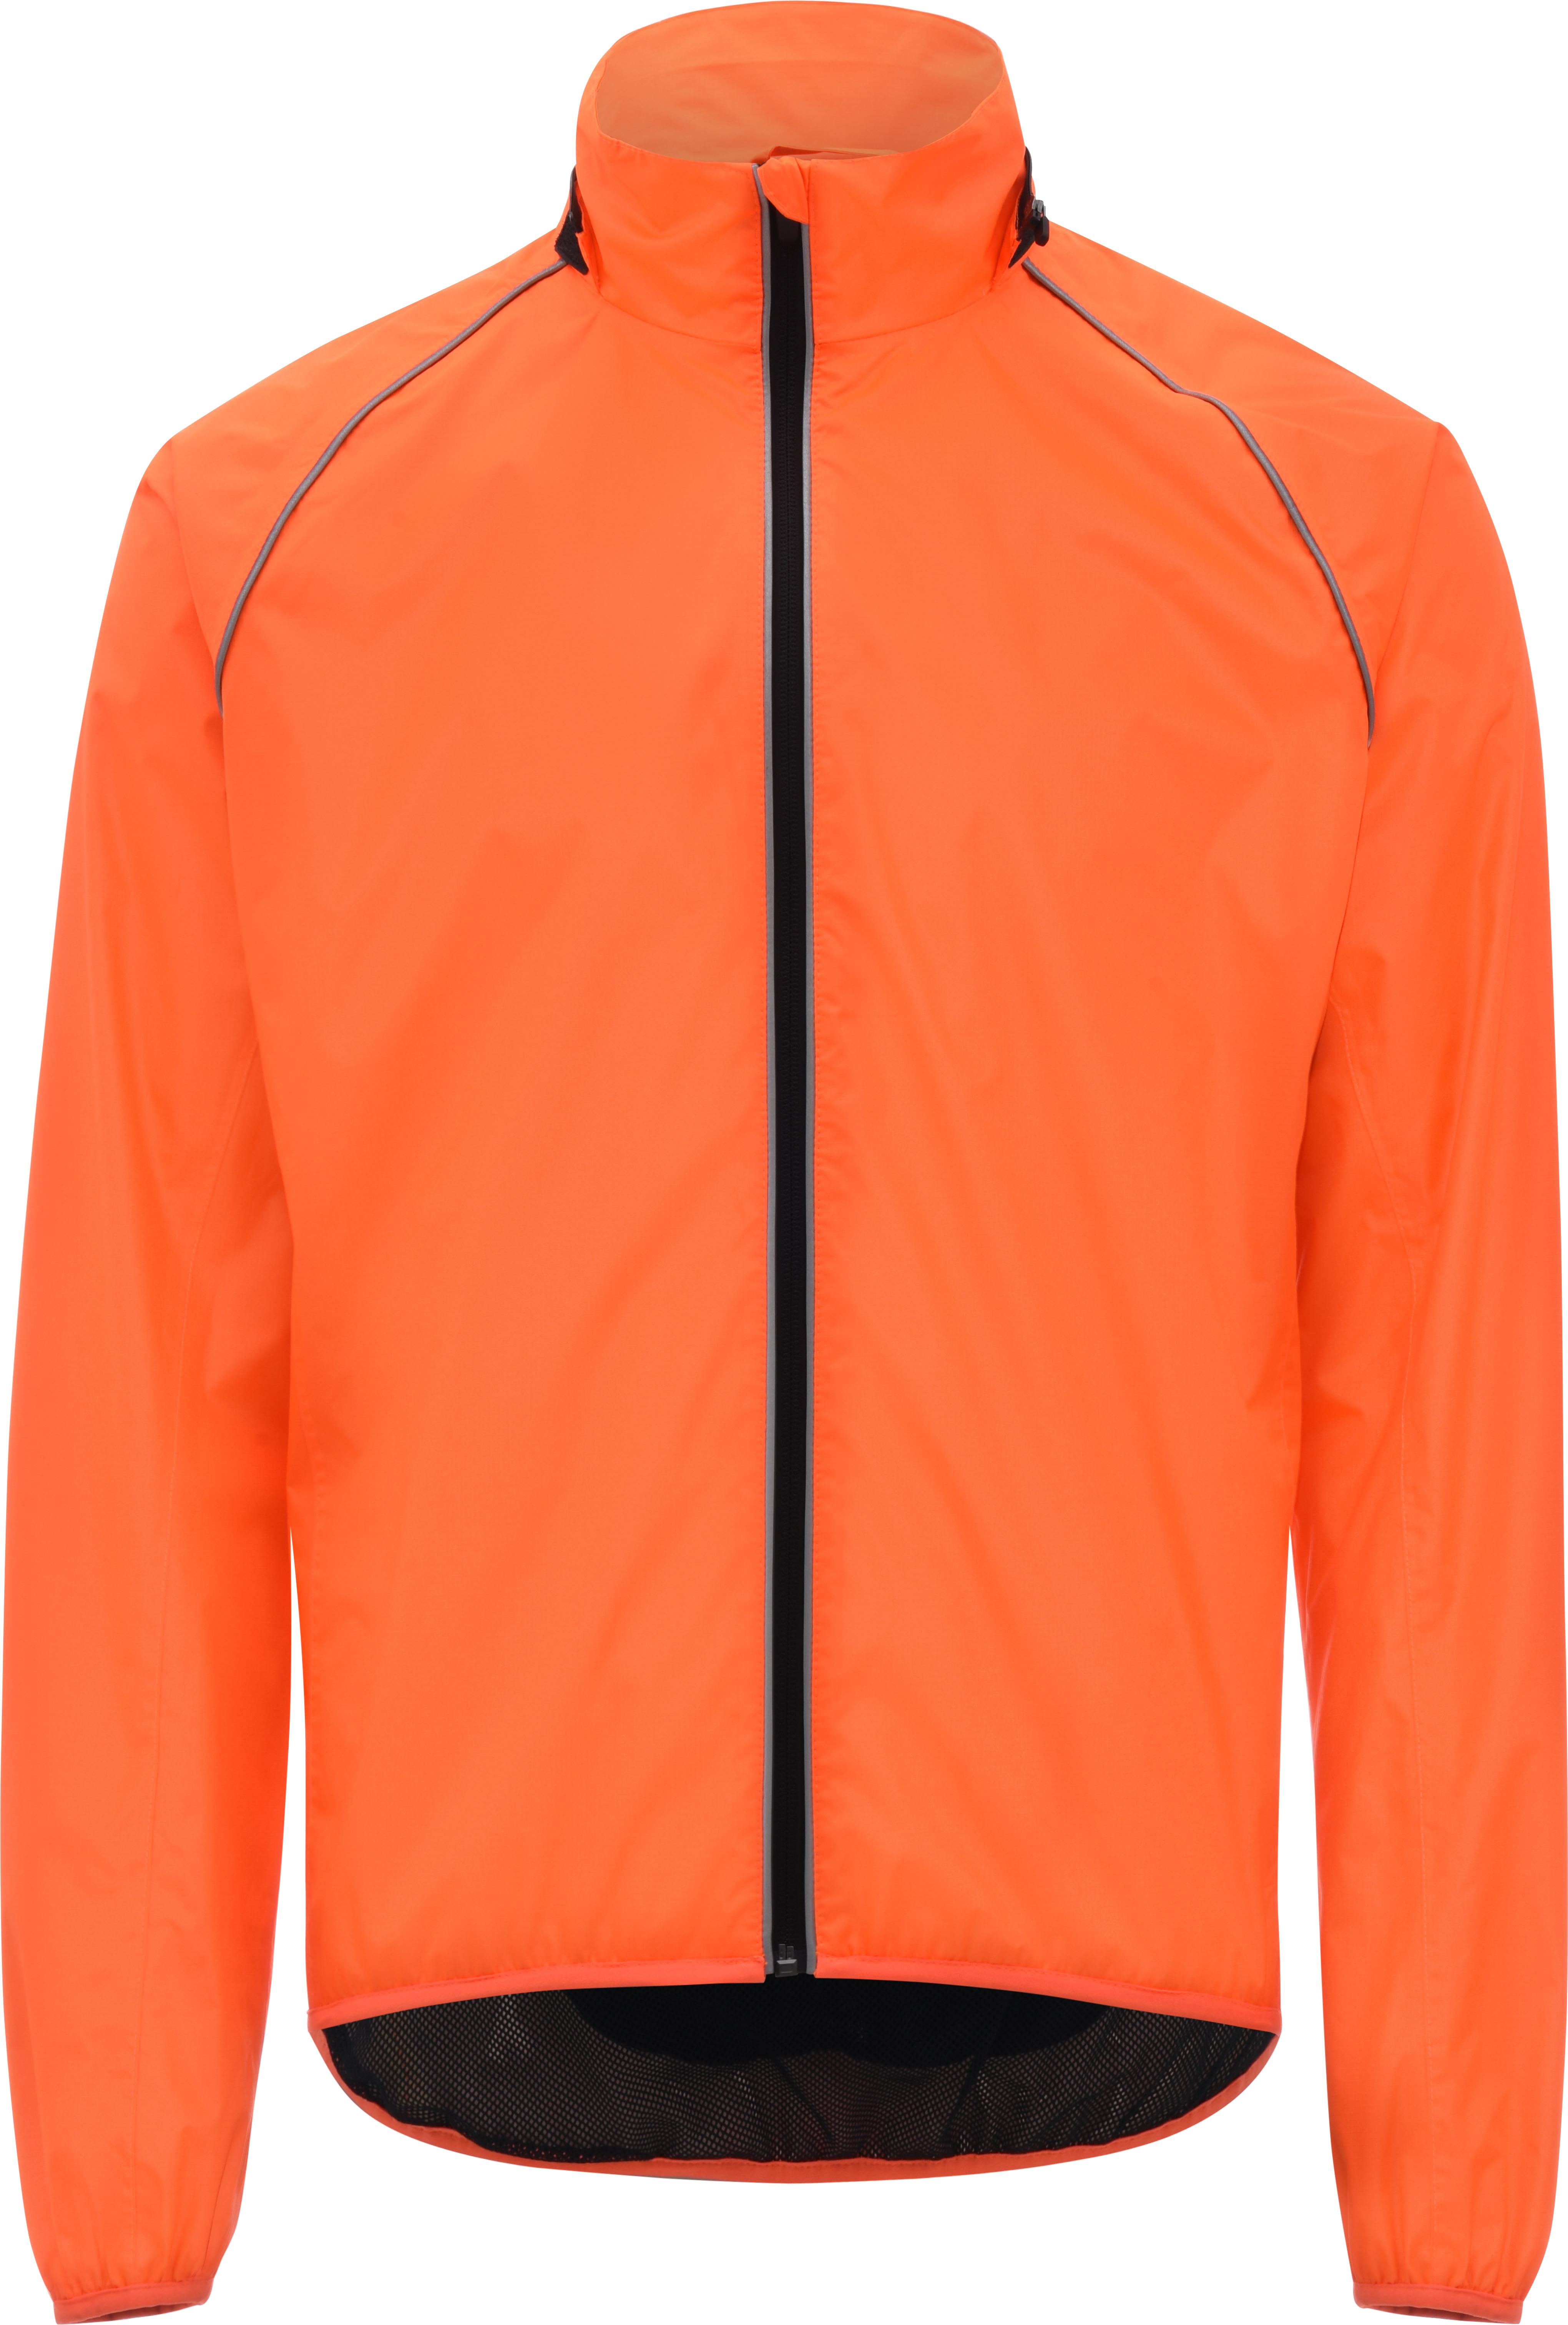 Halfords Ridge Unisex Waterproof Jacket - Fluorescent Orange, Xxl